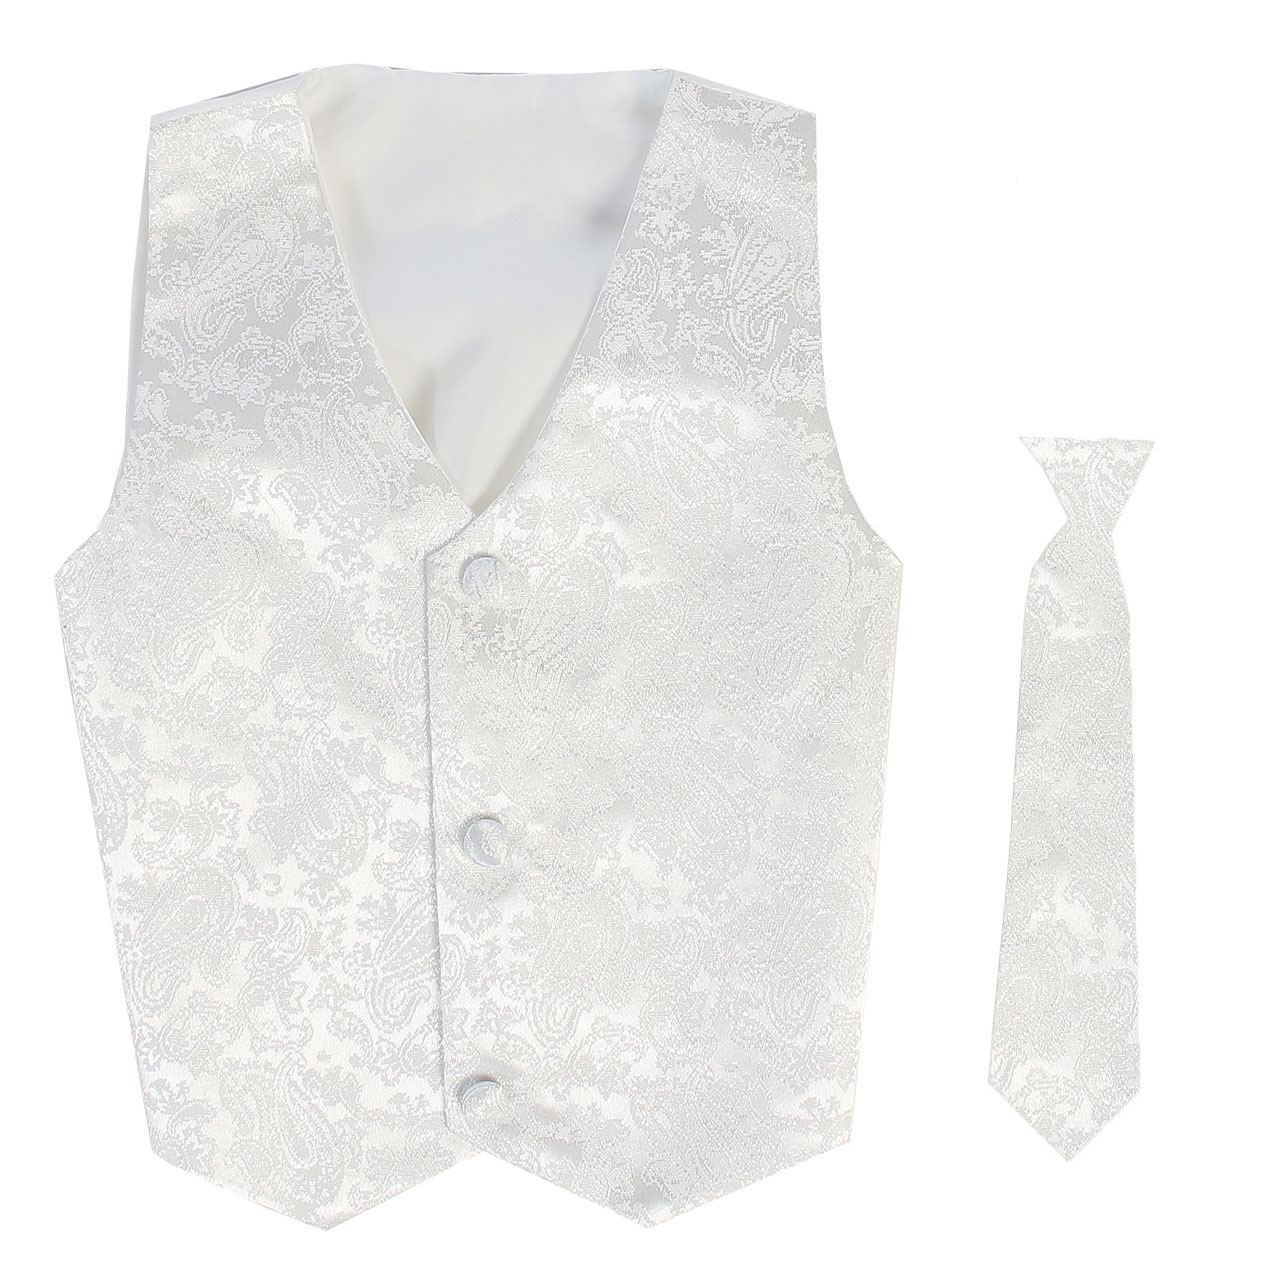 Vest and Clip On Boy Necktie set - White Paisley - 4T